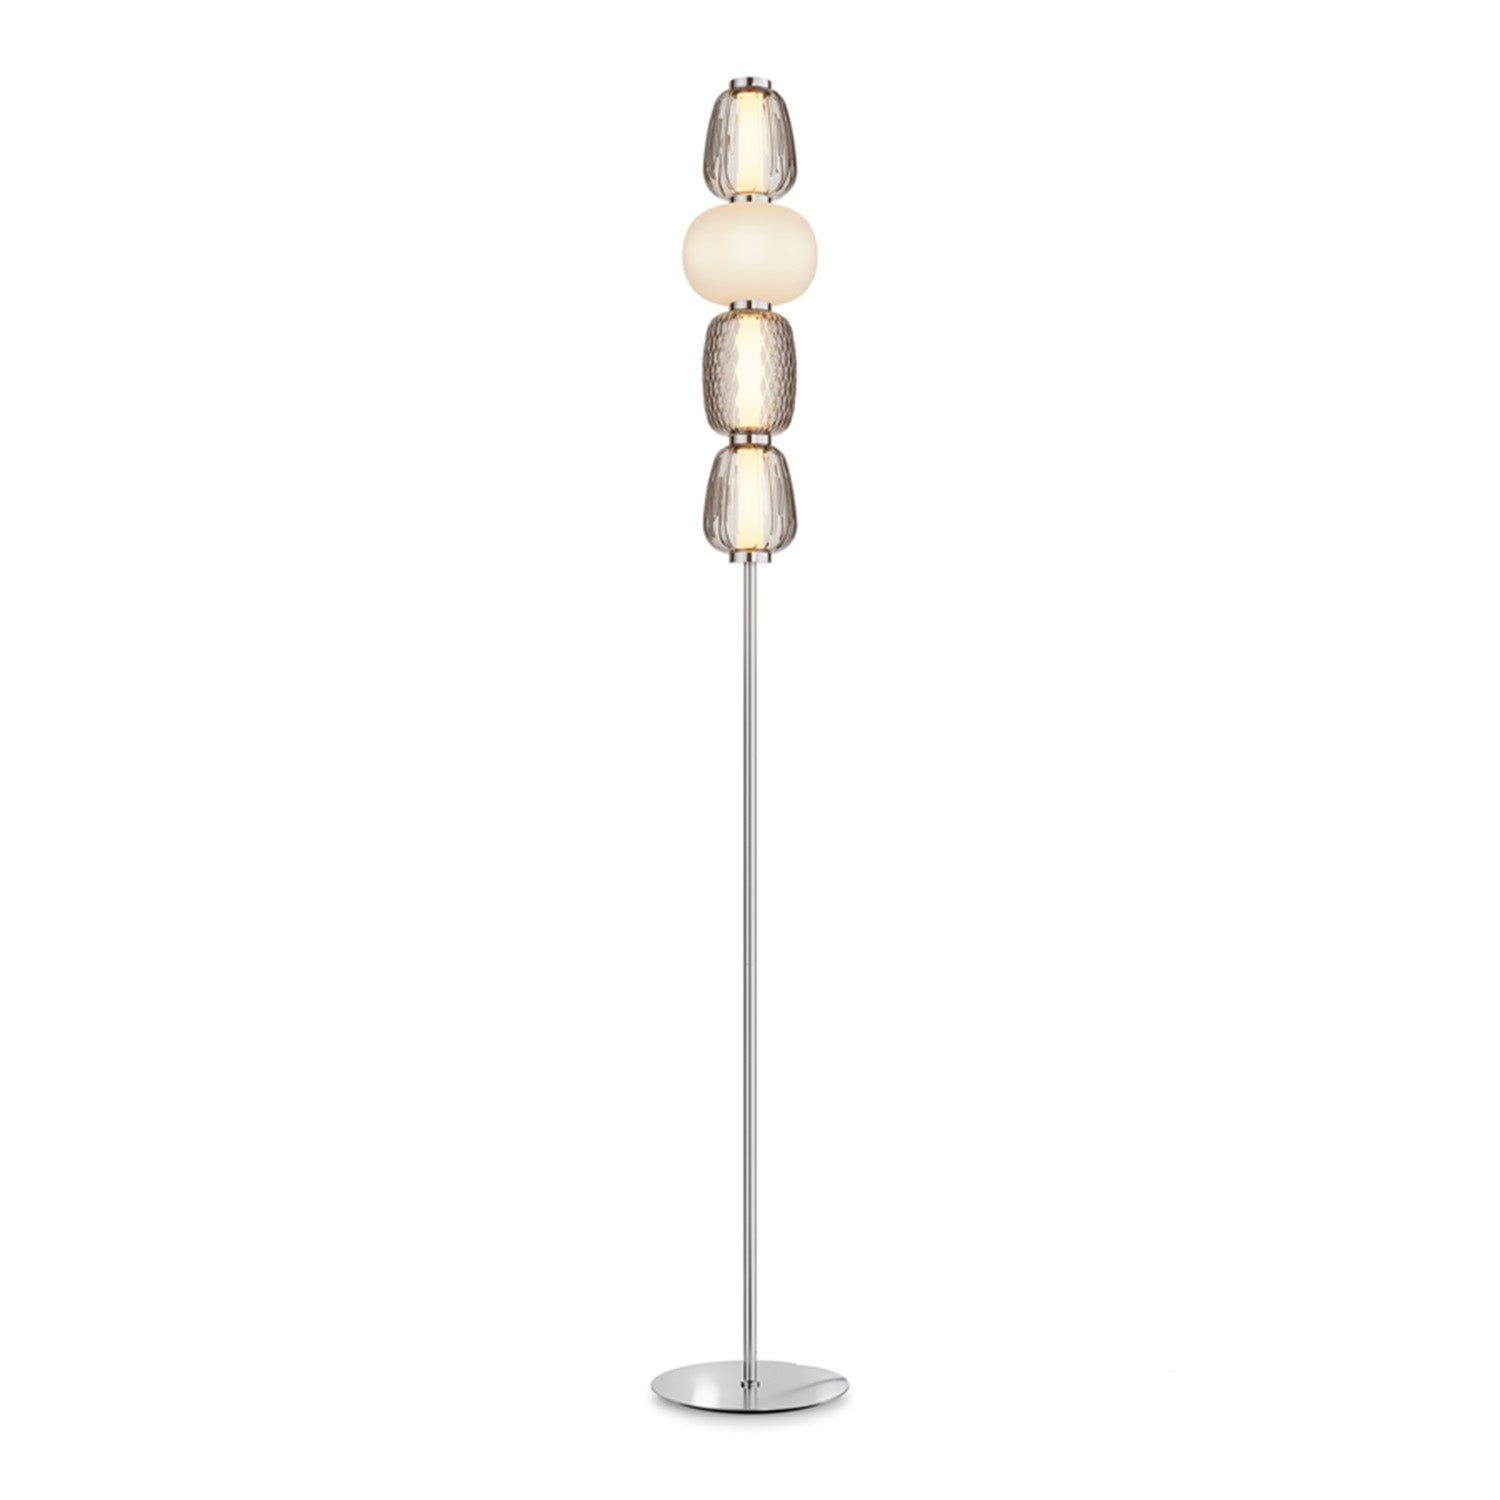 MUSTER – Stehlampe aus Glas und goldenem oder silbernem Stahl